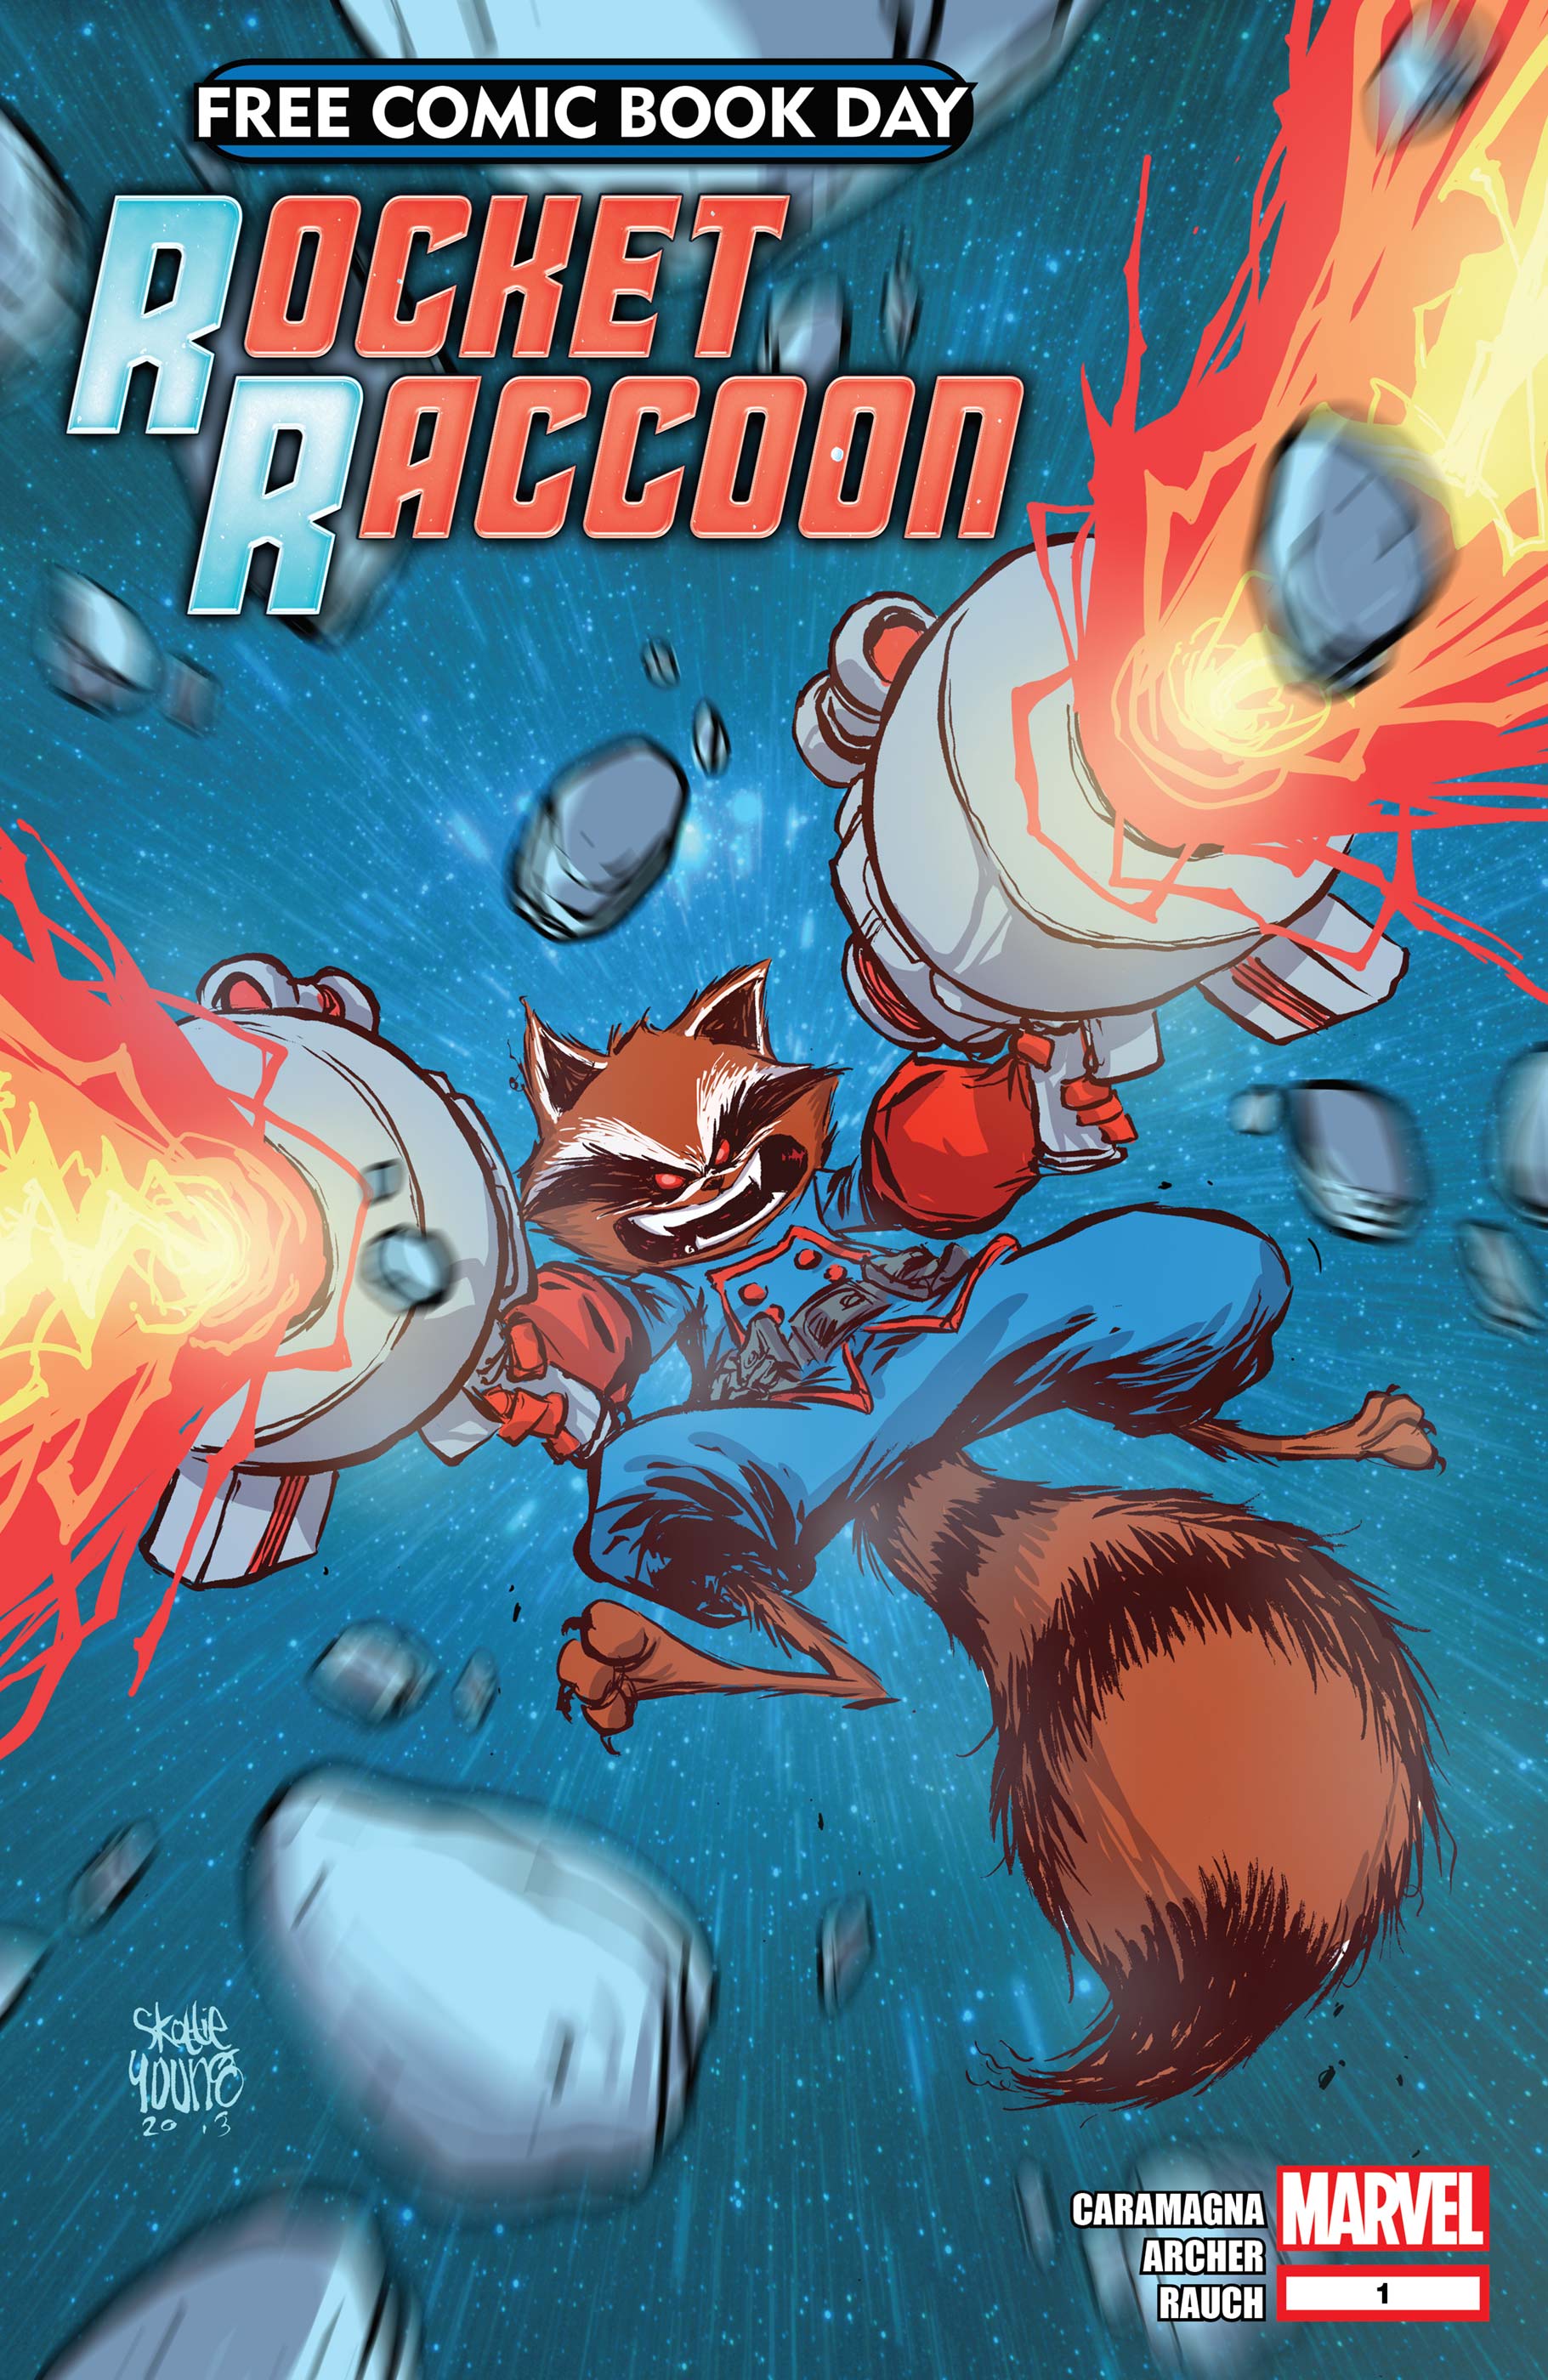 Free Comic Book Day (Rocket Raccoon) (2014) #1